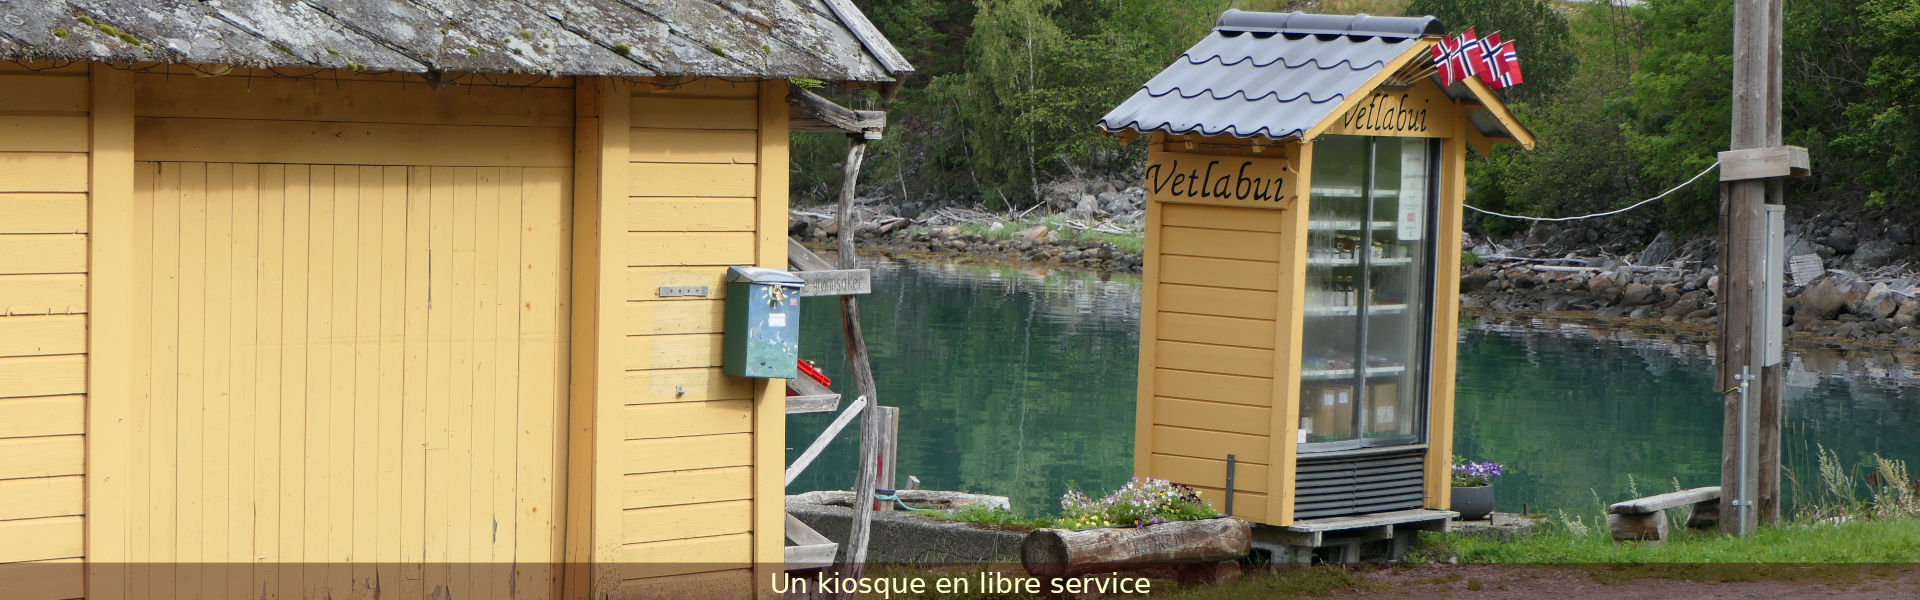 Un kiosque en libre service, Norvège